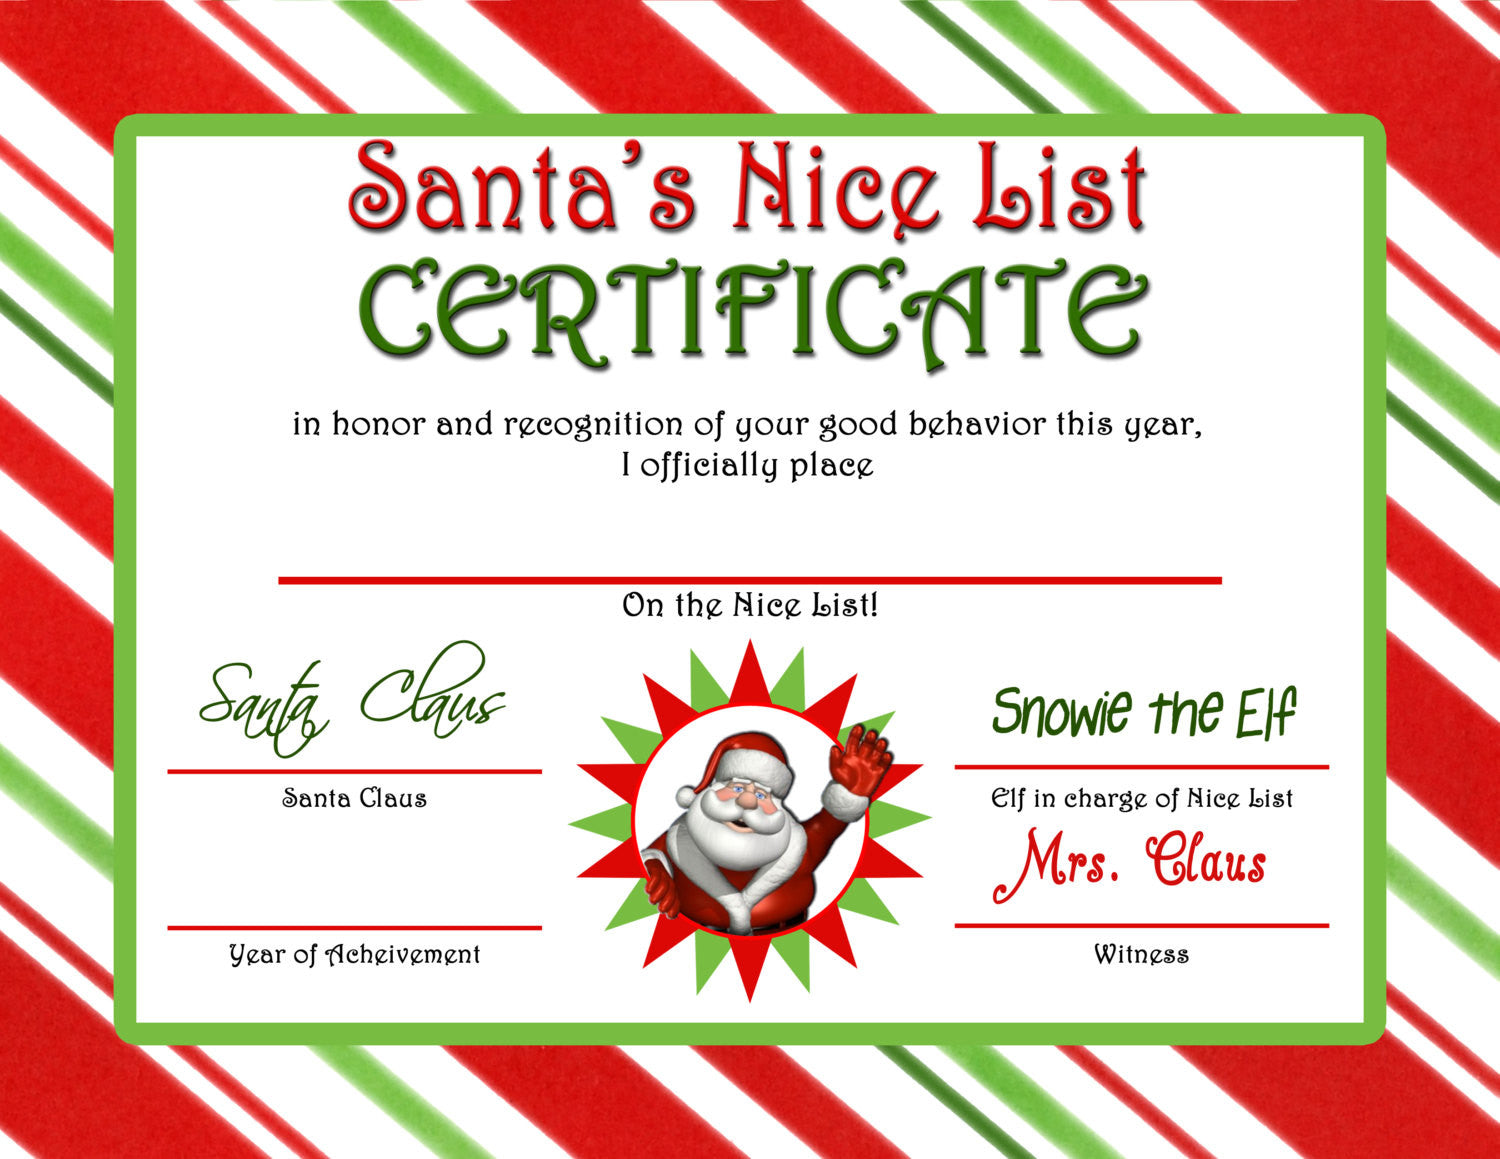 Letter From Santa & Nice List Certificate - Instant ...